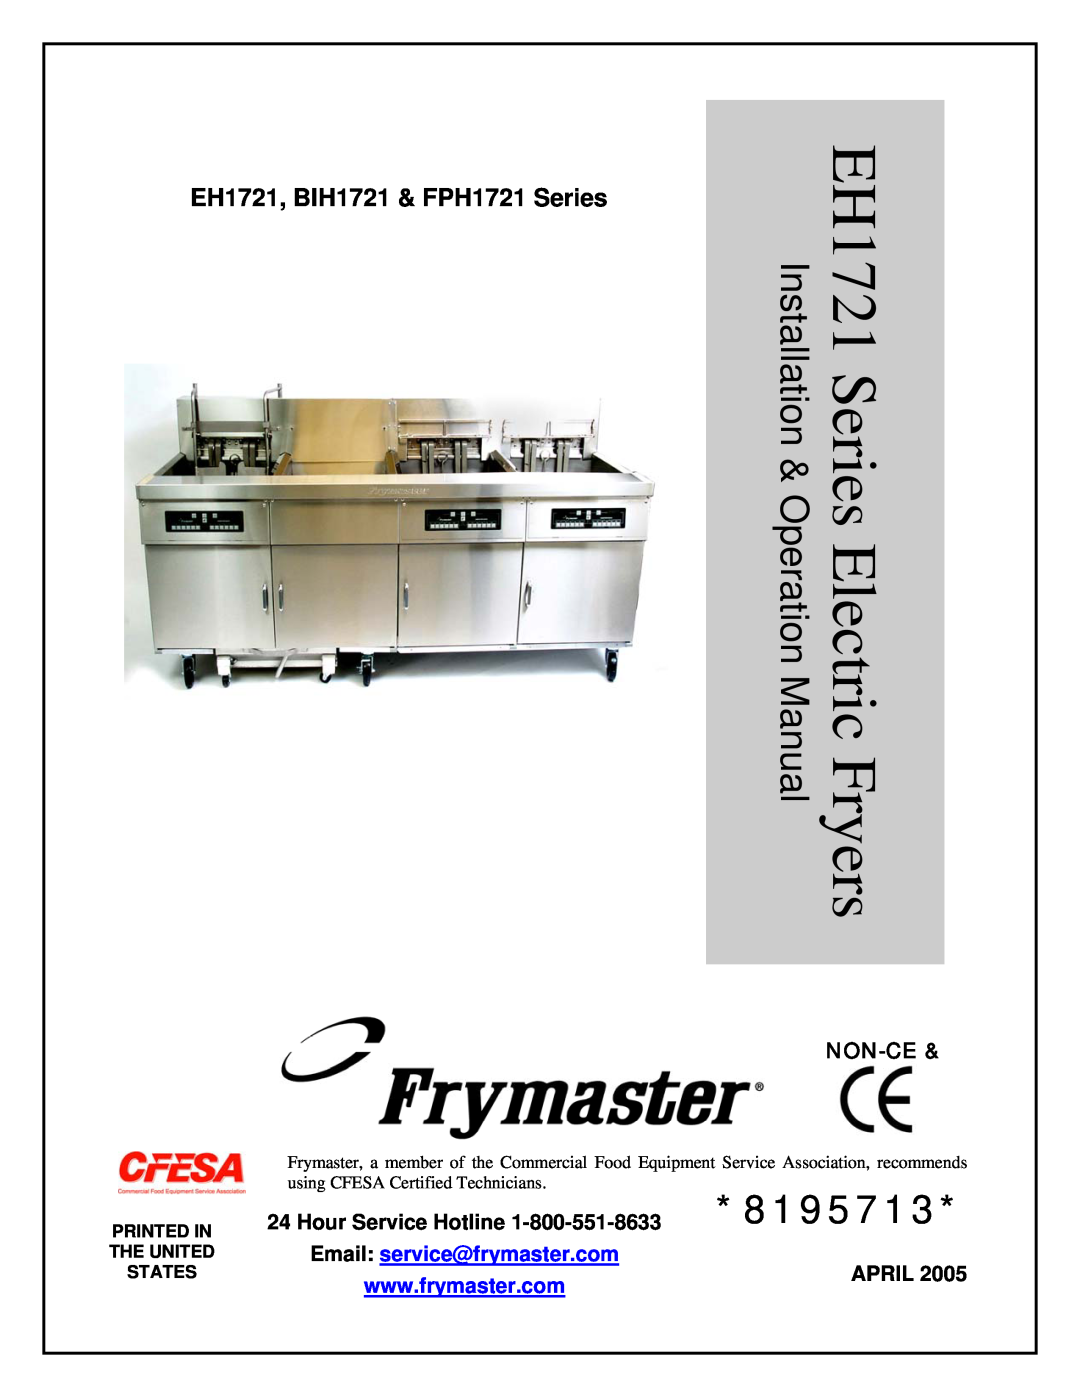 Frymaster EH1721 SERIES operation manual EH1721, BIH1721 & FPH1721 Series, 8195713, EH1721 Series Electric Fryers 